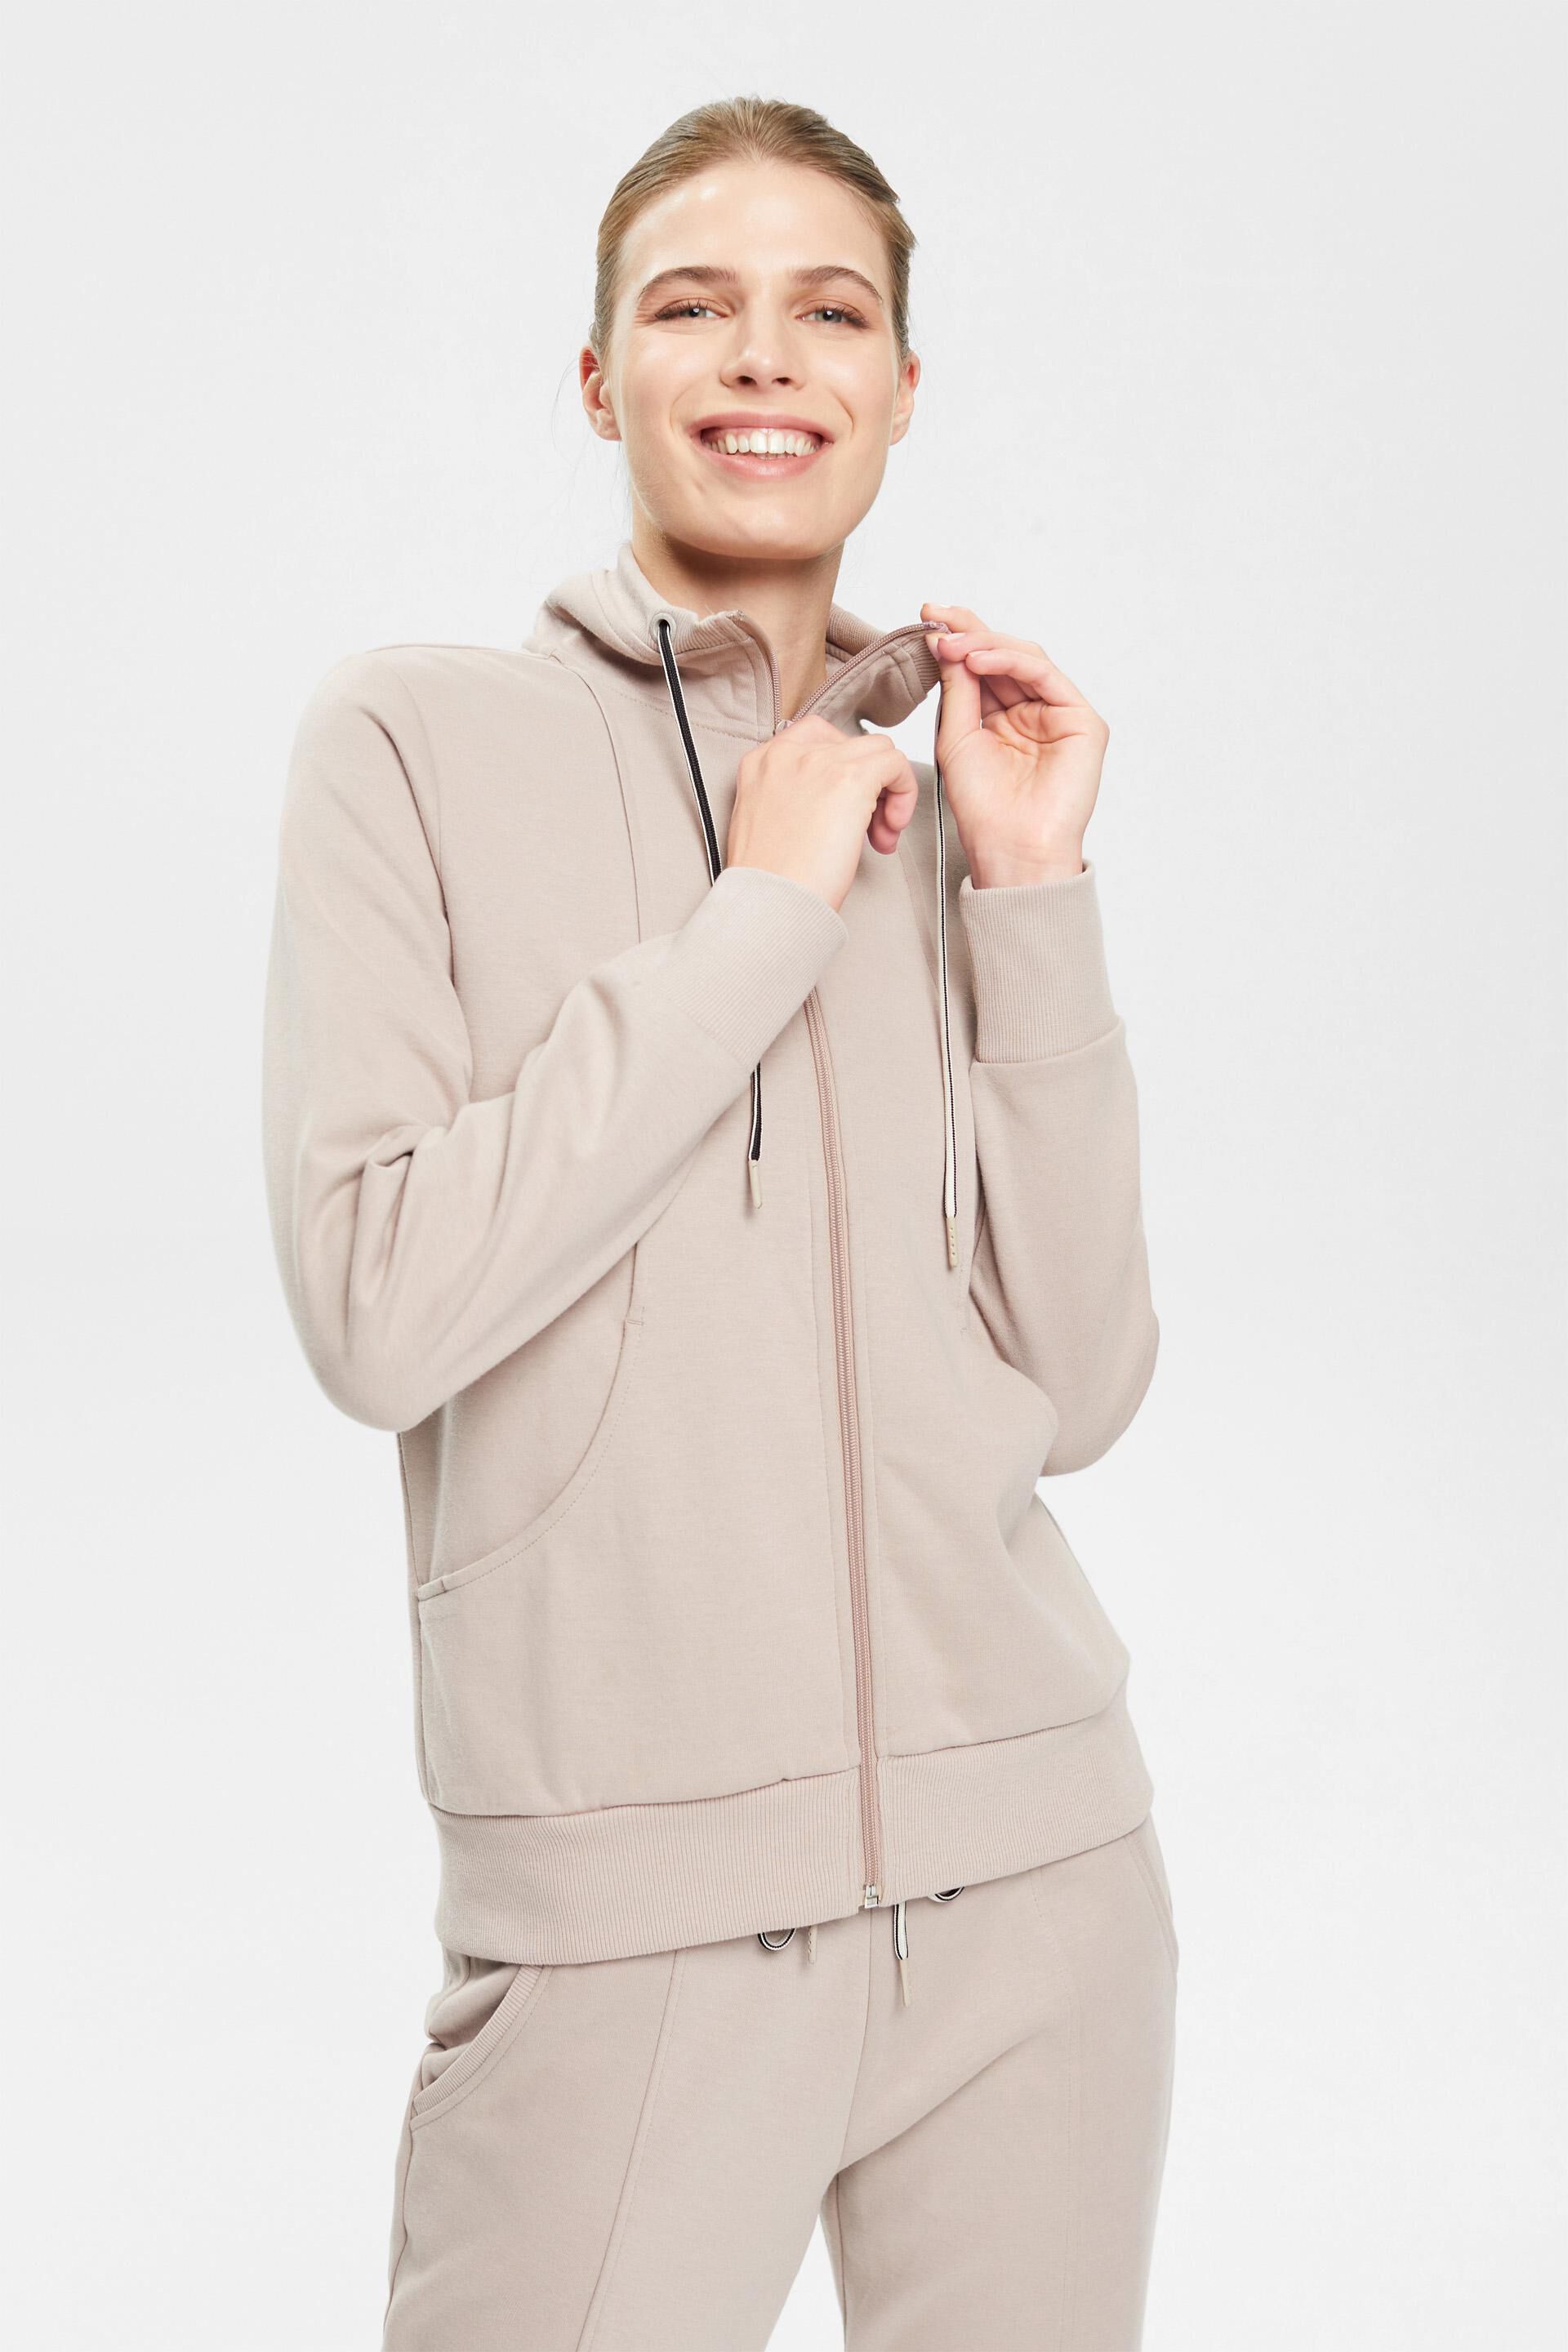 Online Shop Esprit Zipper sweatshirt, cotton blend